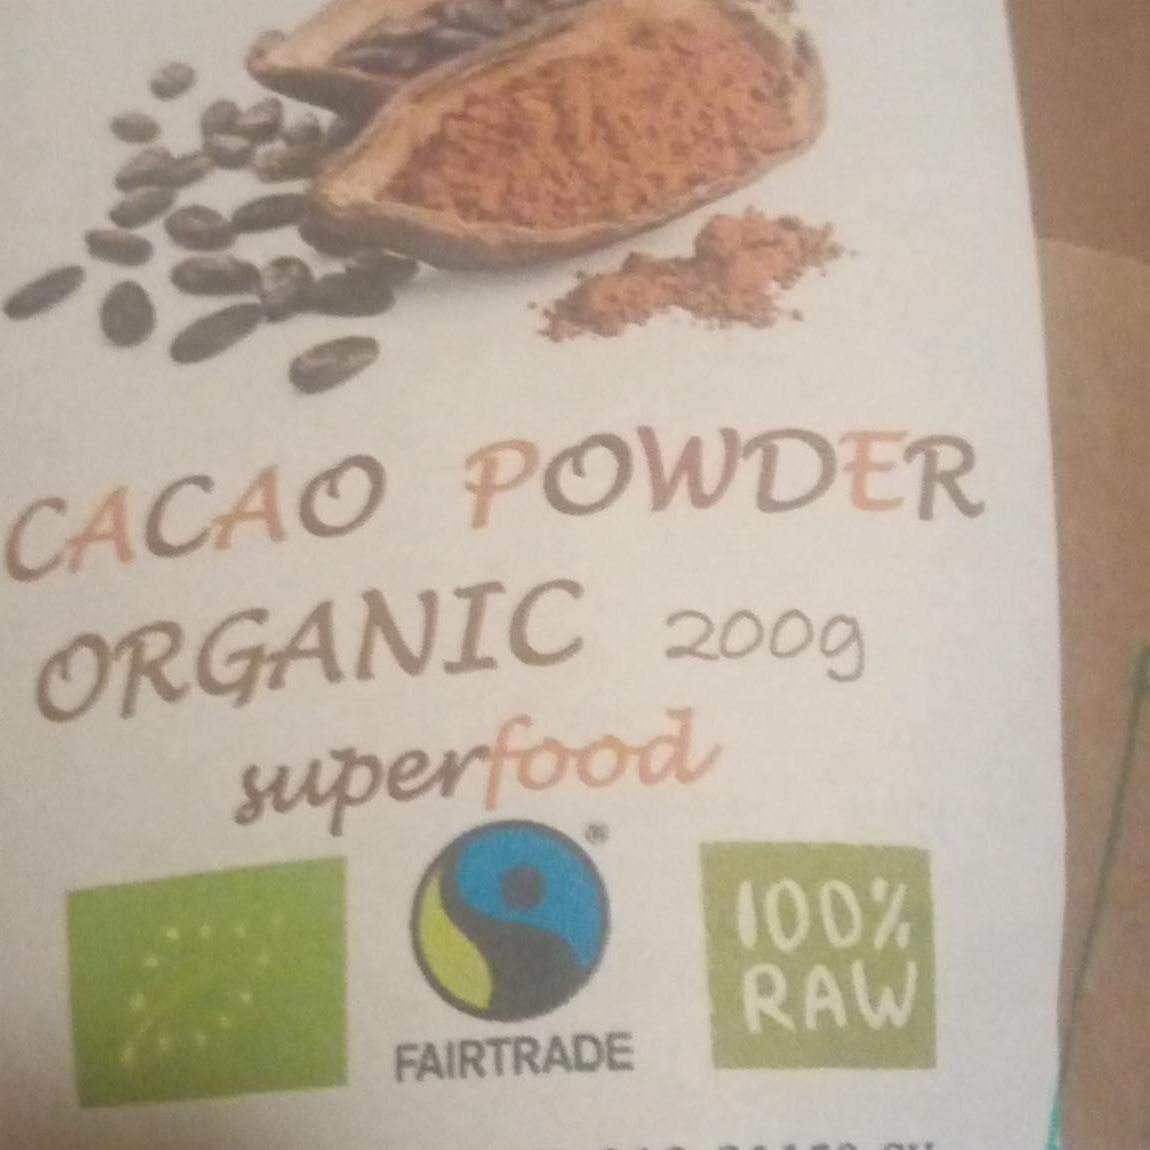 Fotografie - Cacao powder organic superfood 100% Raw